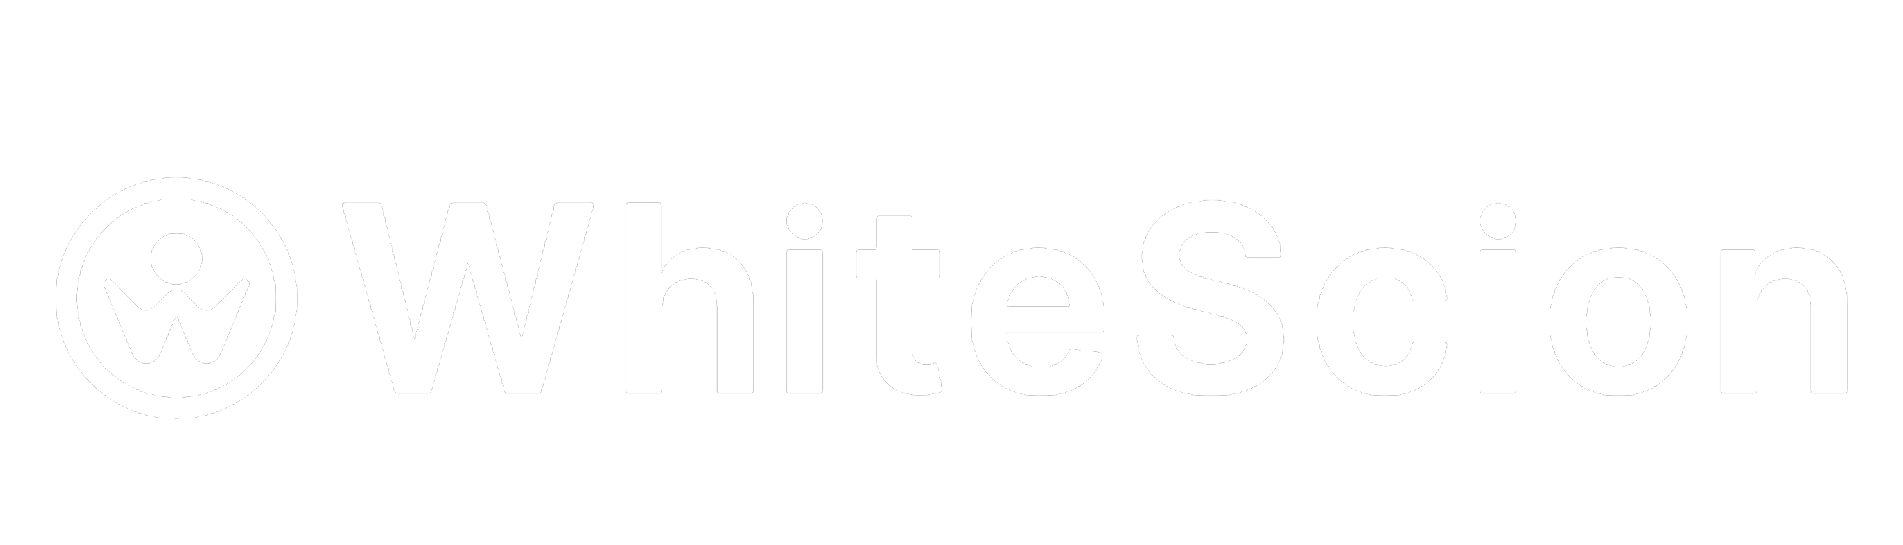 WhiteScion Technologies Logo png